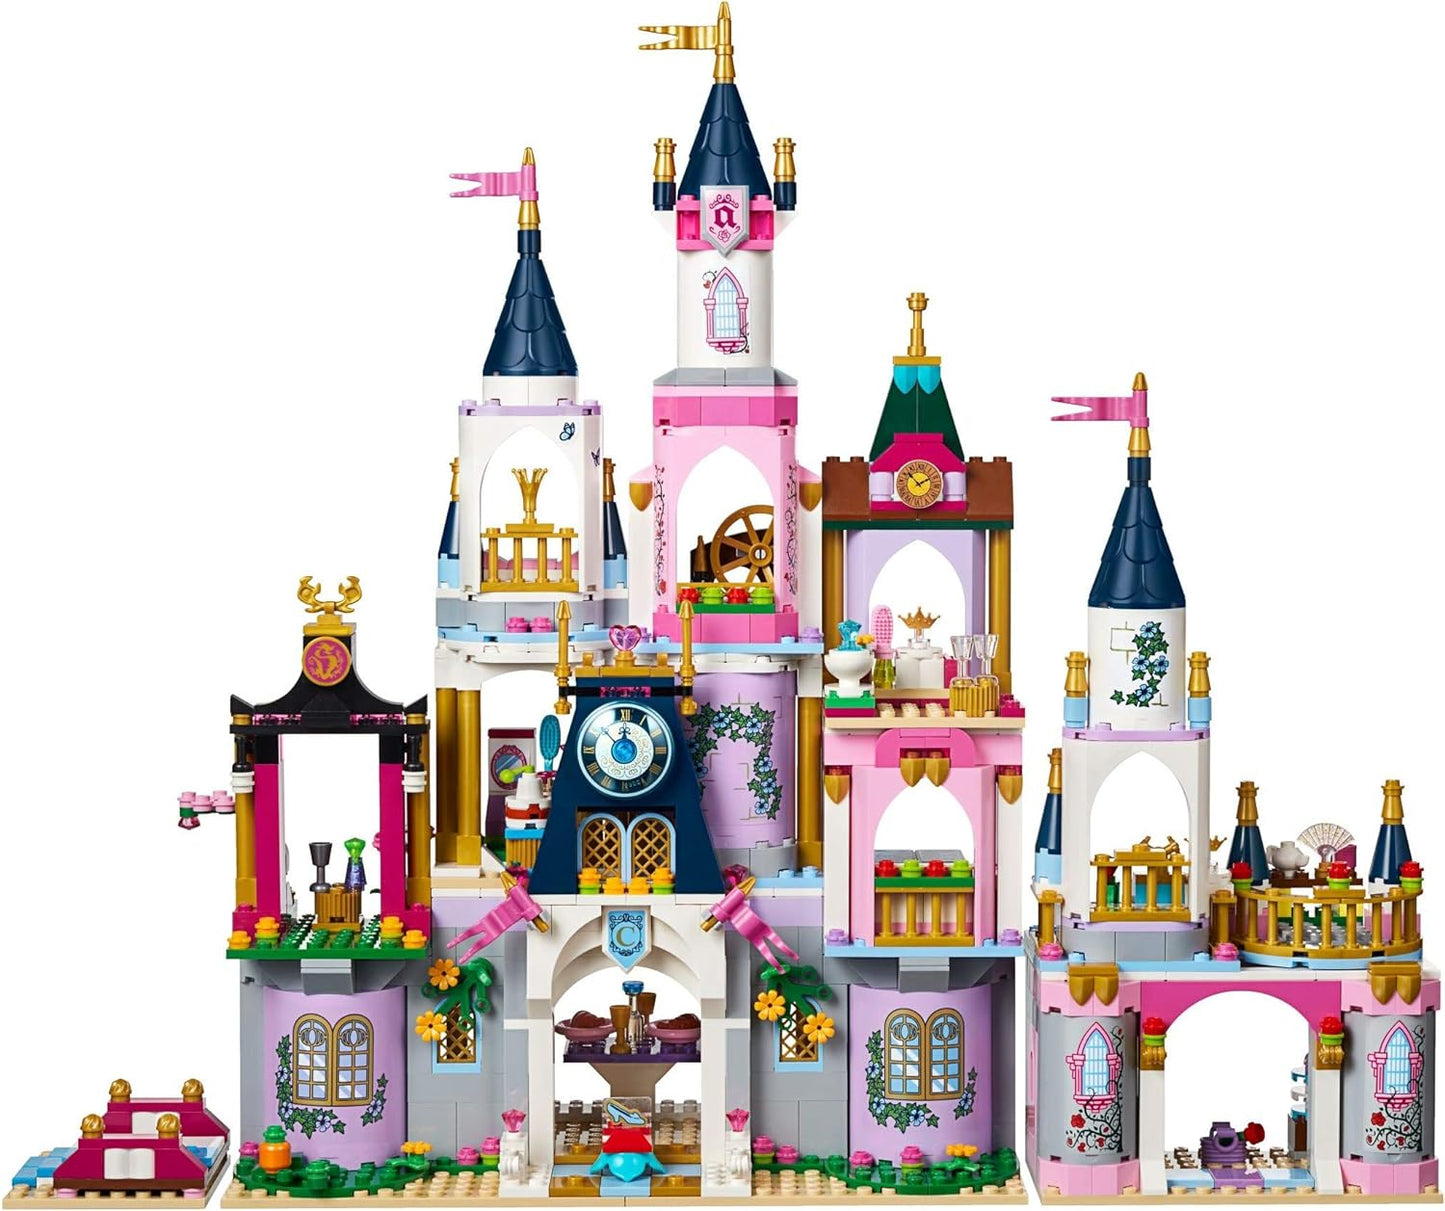 LEGO Disney Princess Cinderella's Dream Castle 41154 Popular Construction Toy for Kids (585 Pieces)